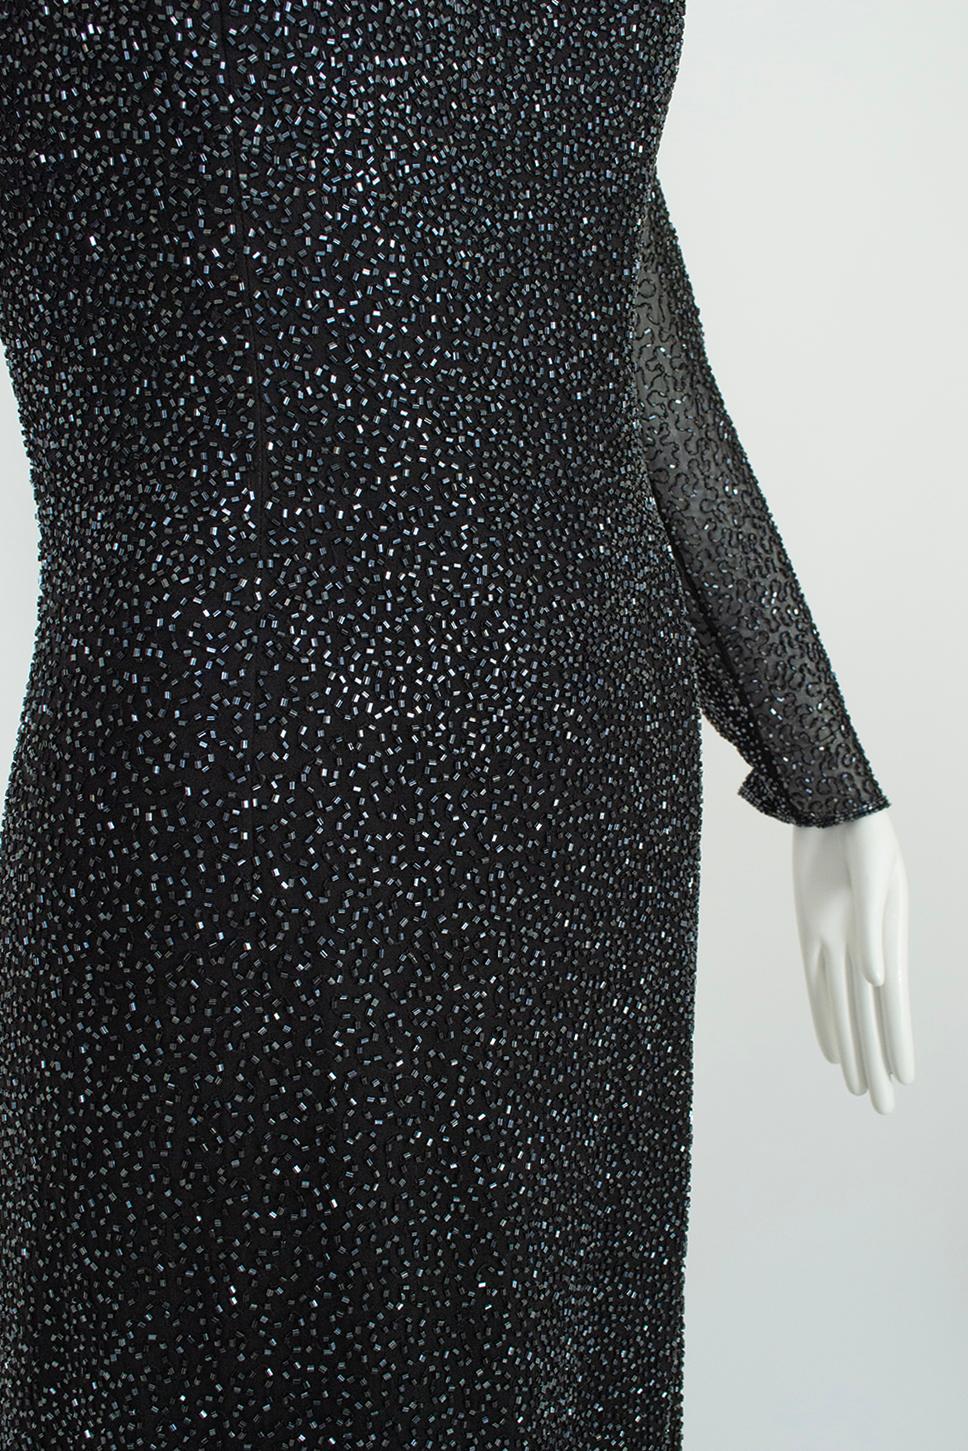 Lillie Rubin Black Full Length Beaded Column Gown w Illusion Sleeves – L, 21st C For Sale 3